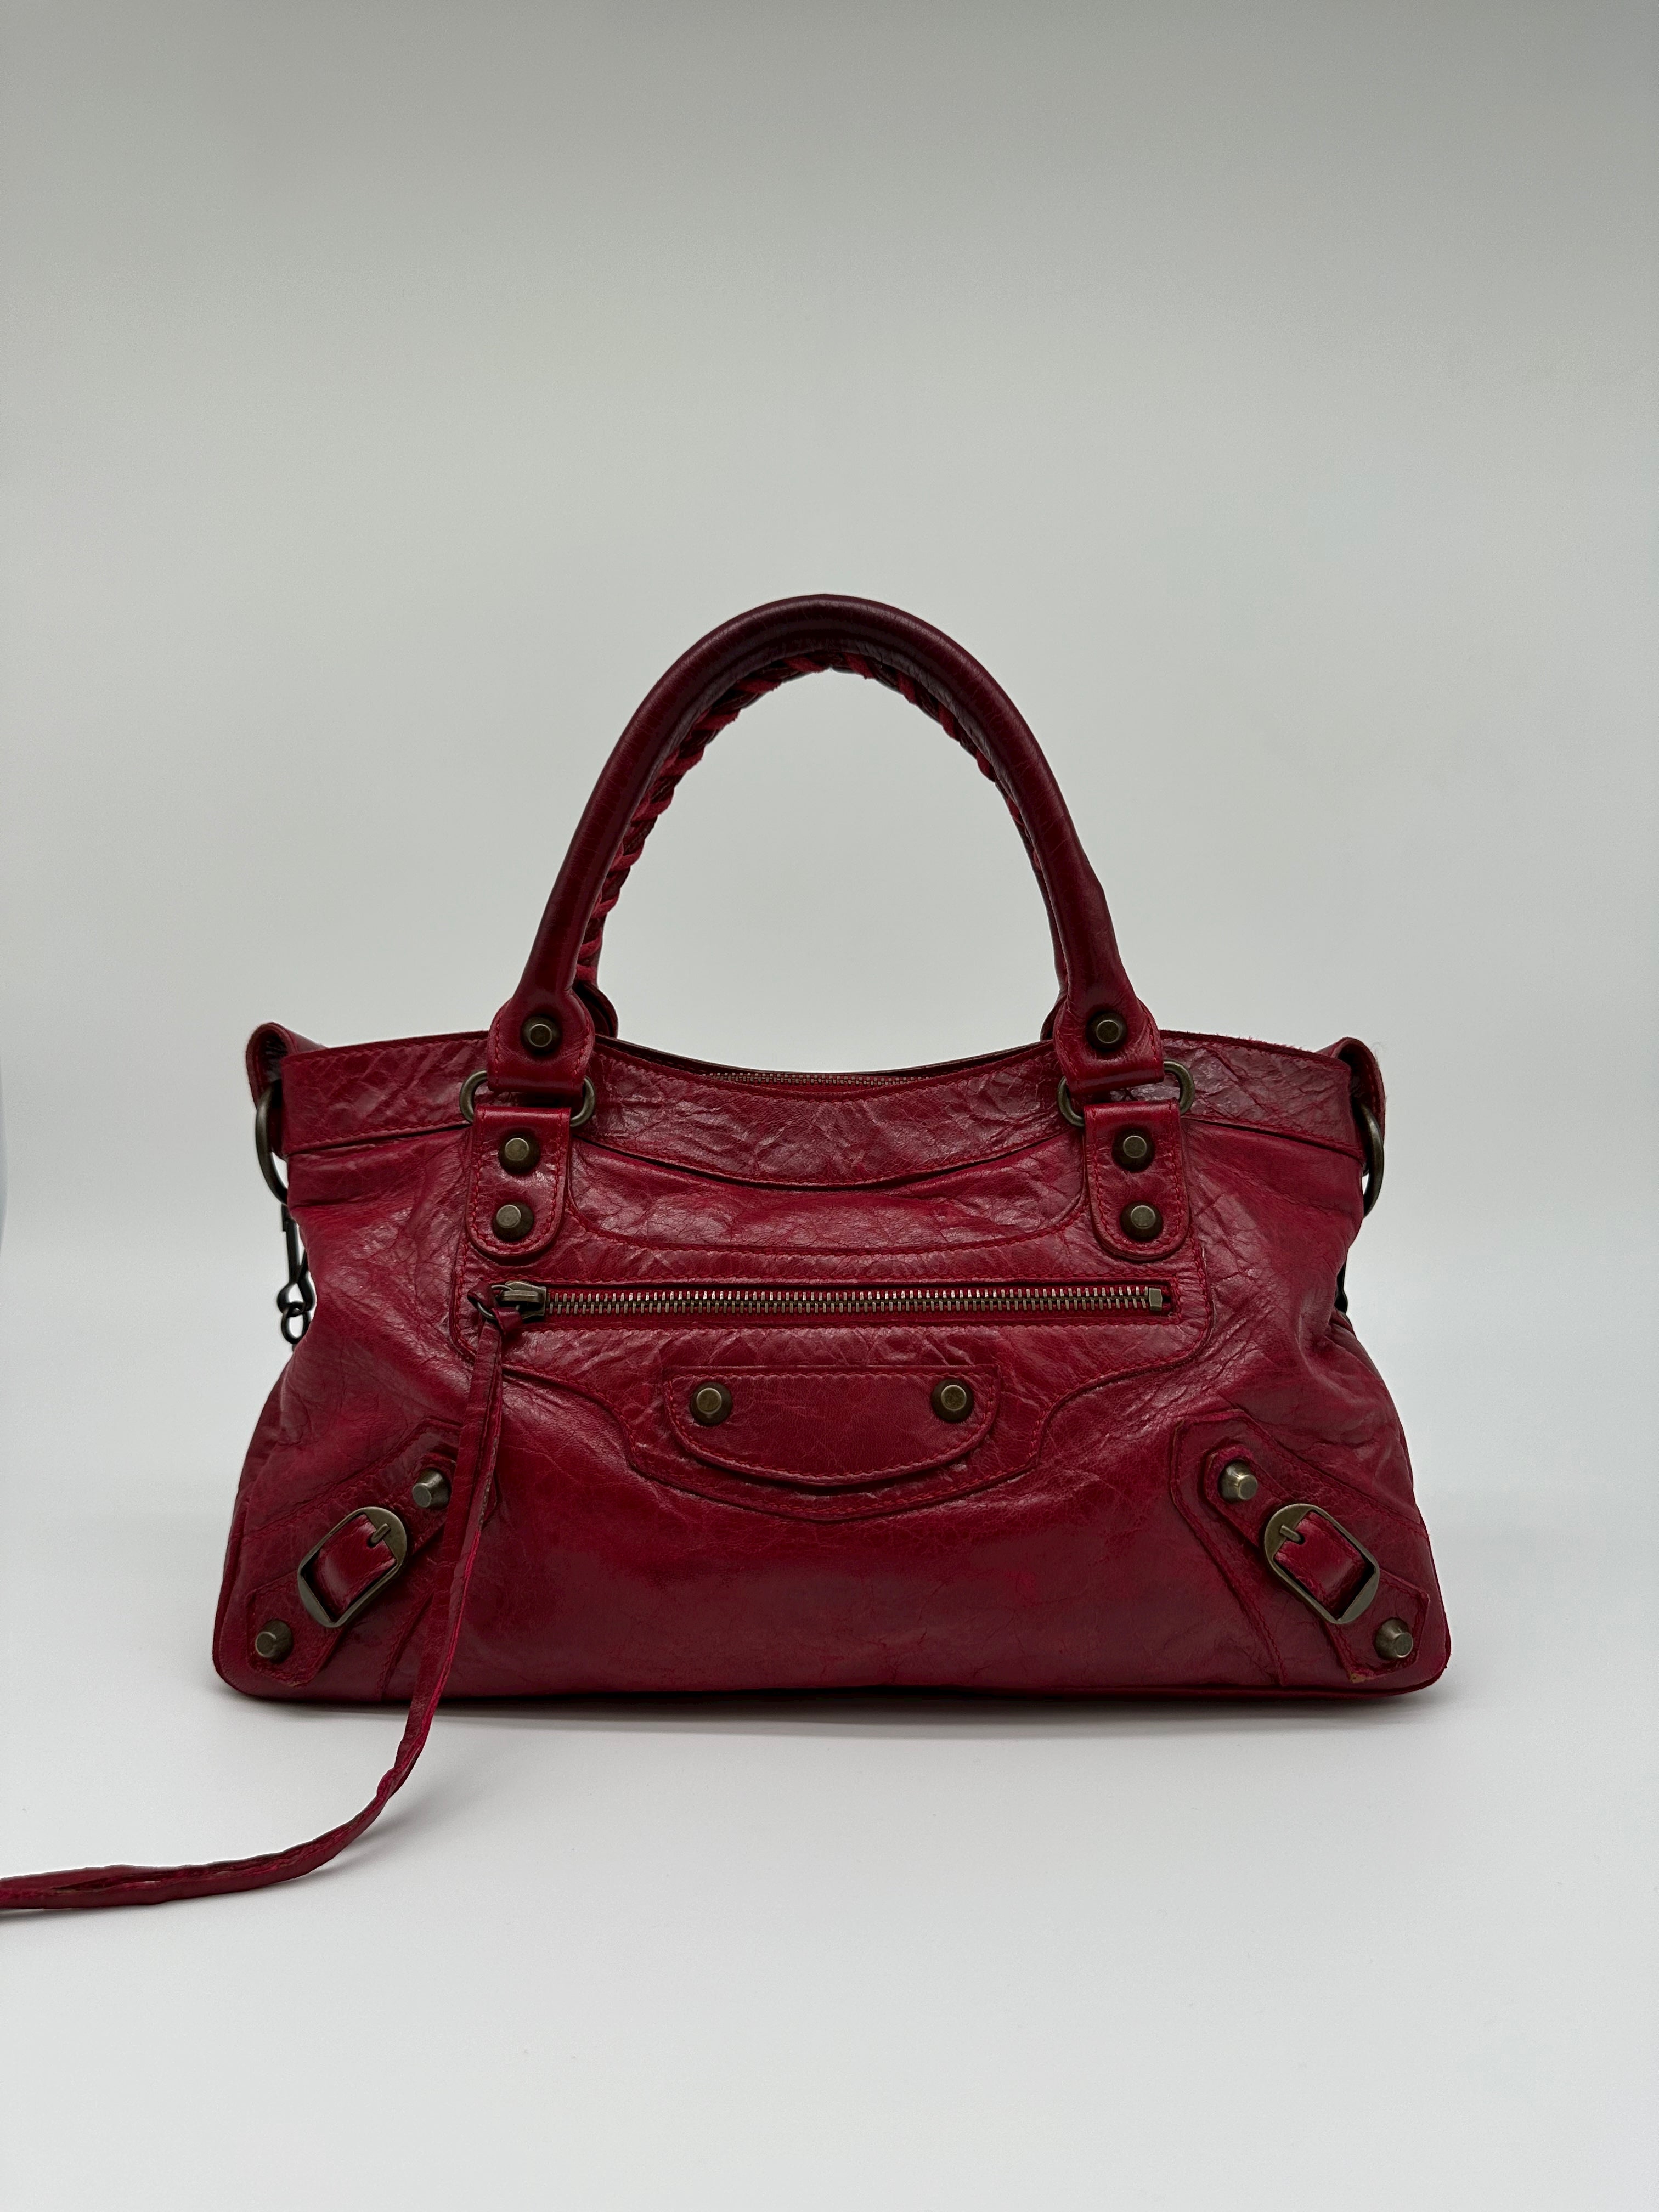 Vintage Balenciaga City Bag | Affordable Luxury Handbags – by